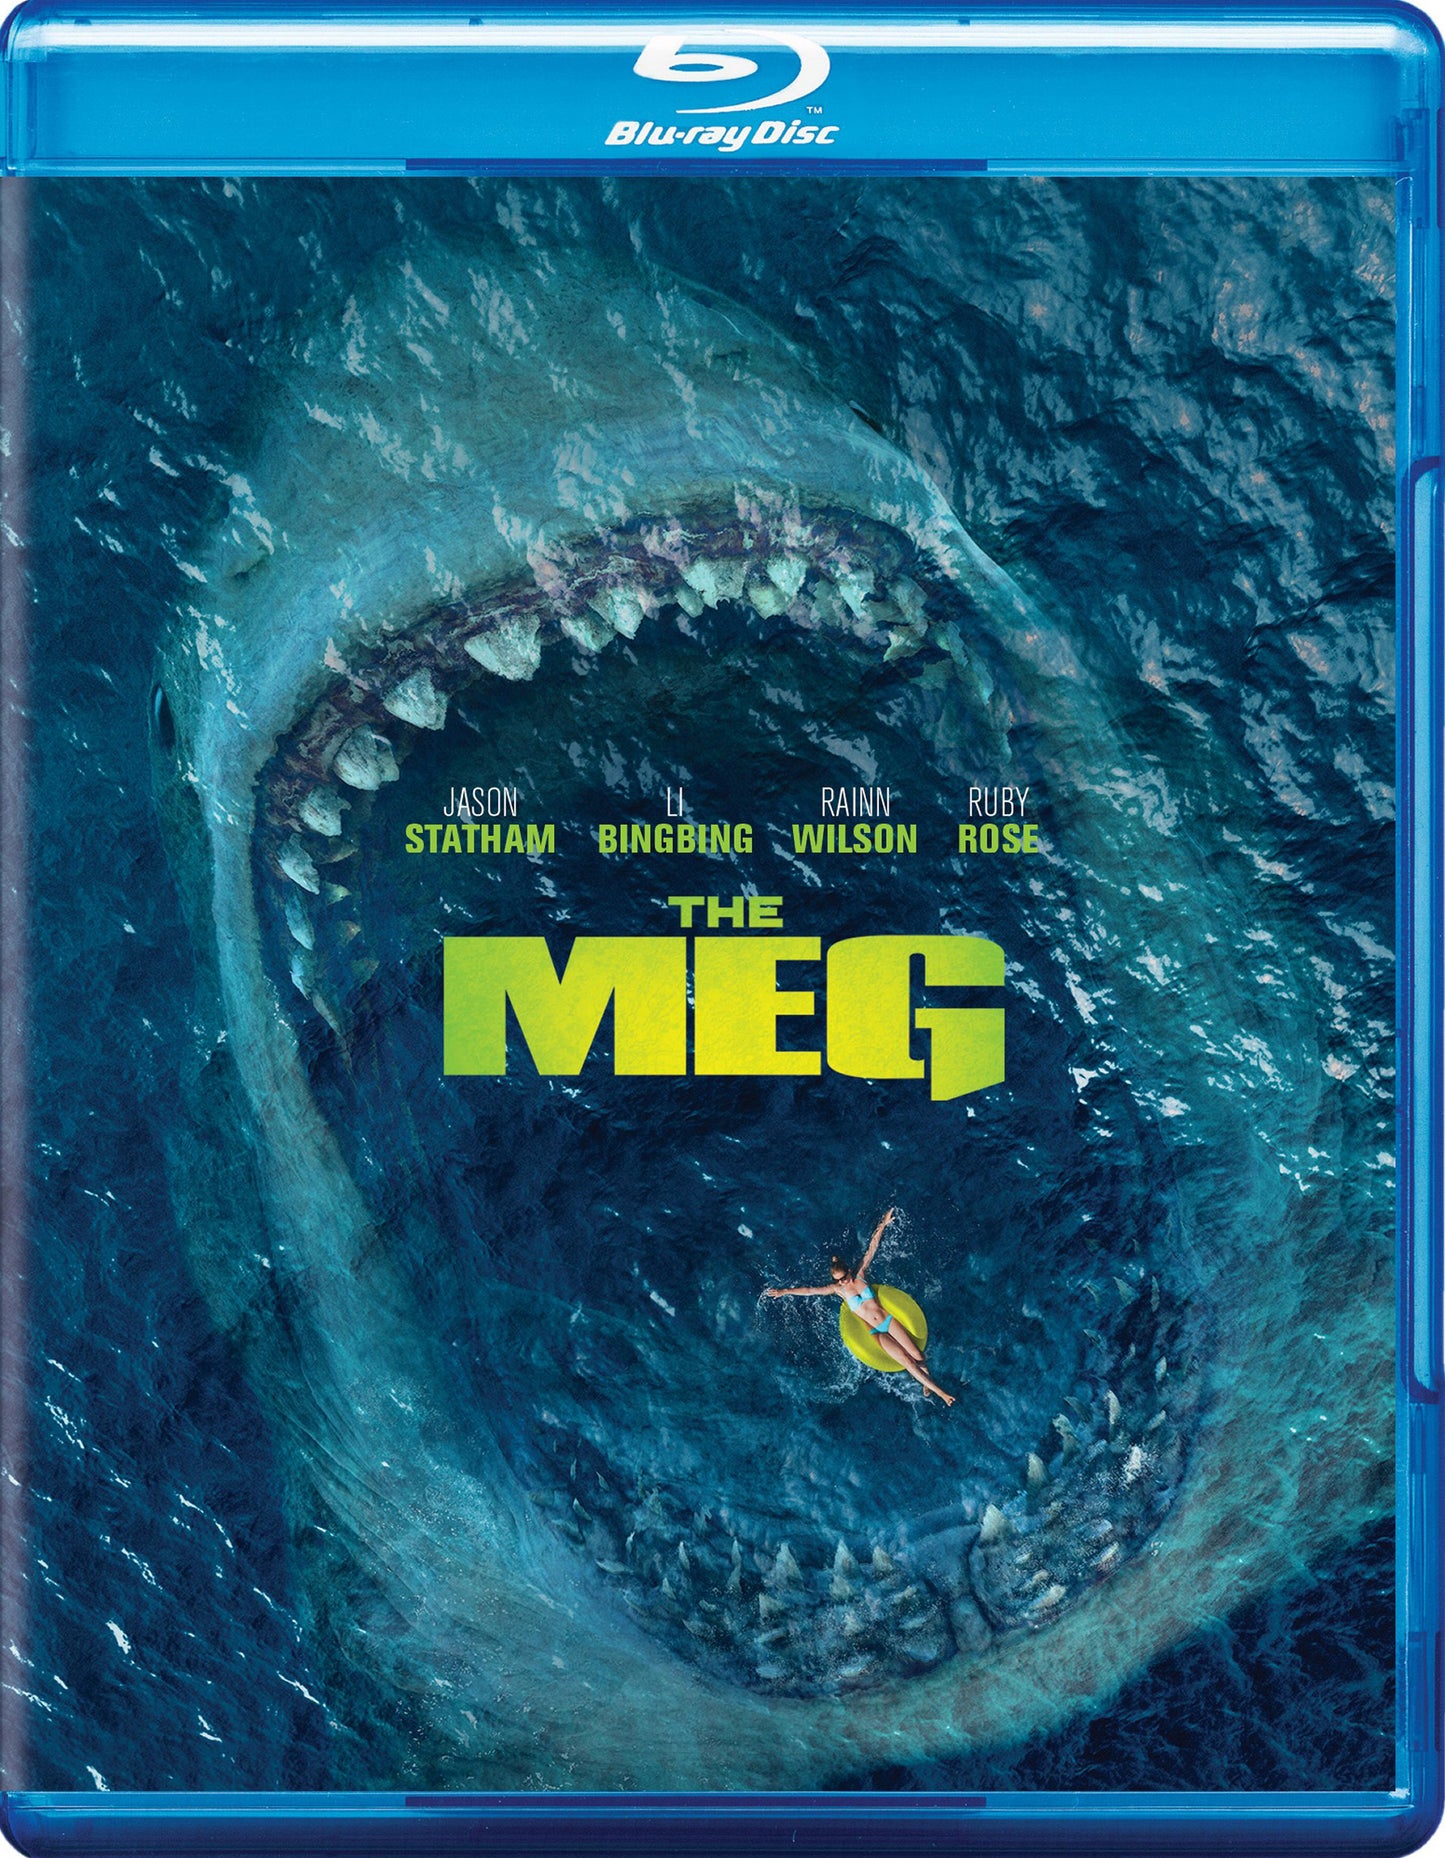 Meg [Blu-ray] cover art